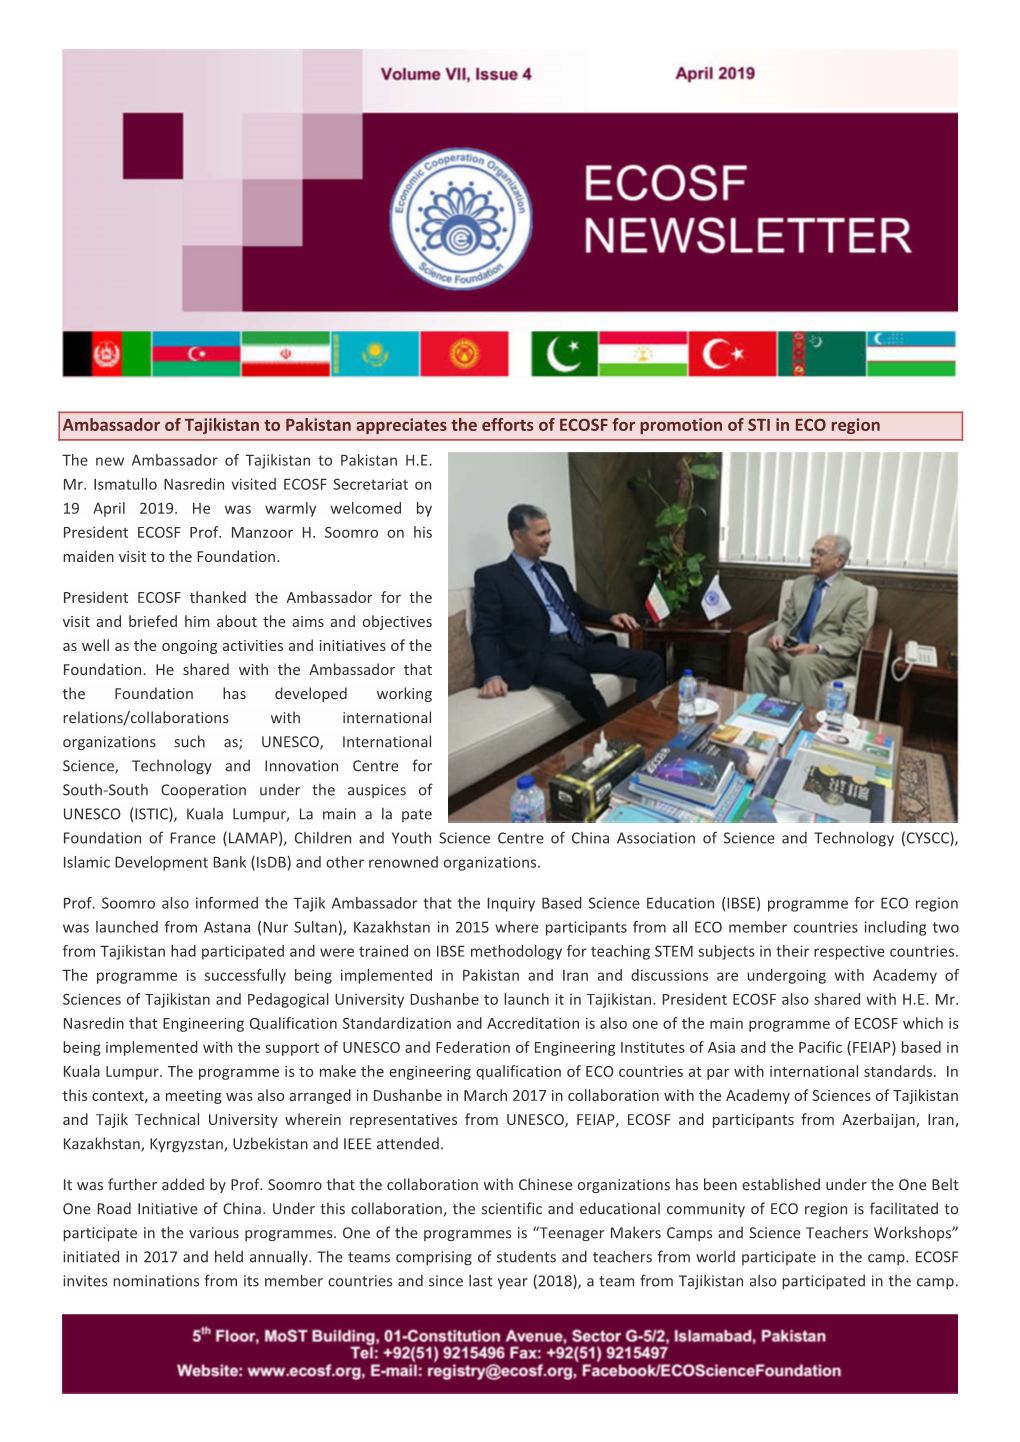 Ambassador of Tajikistan to Pakistan Appreciates the Efforts of ECOSF for Promotion of STI in ECO Region